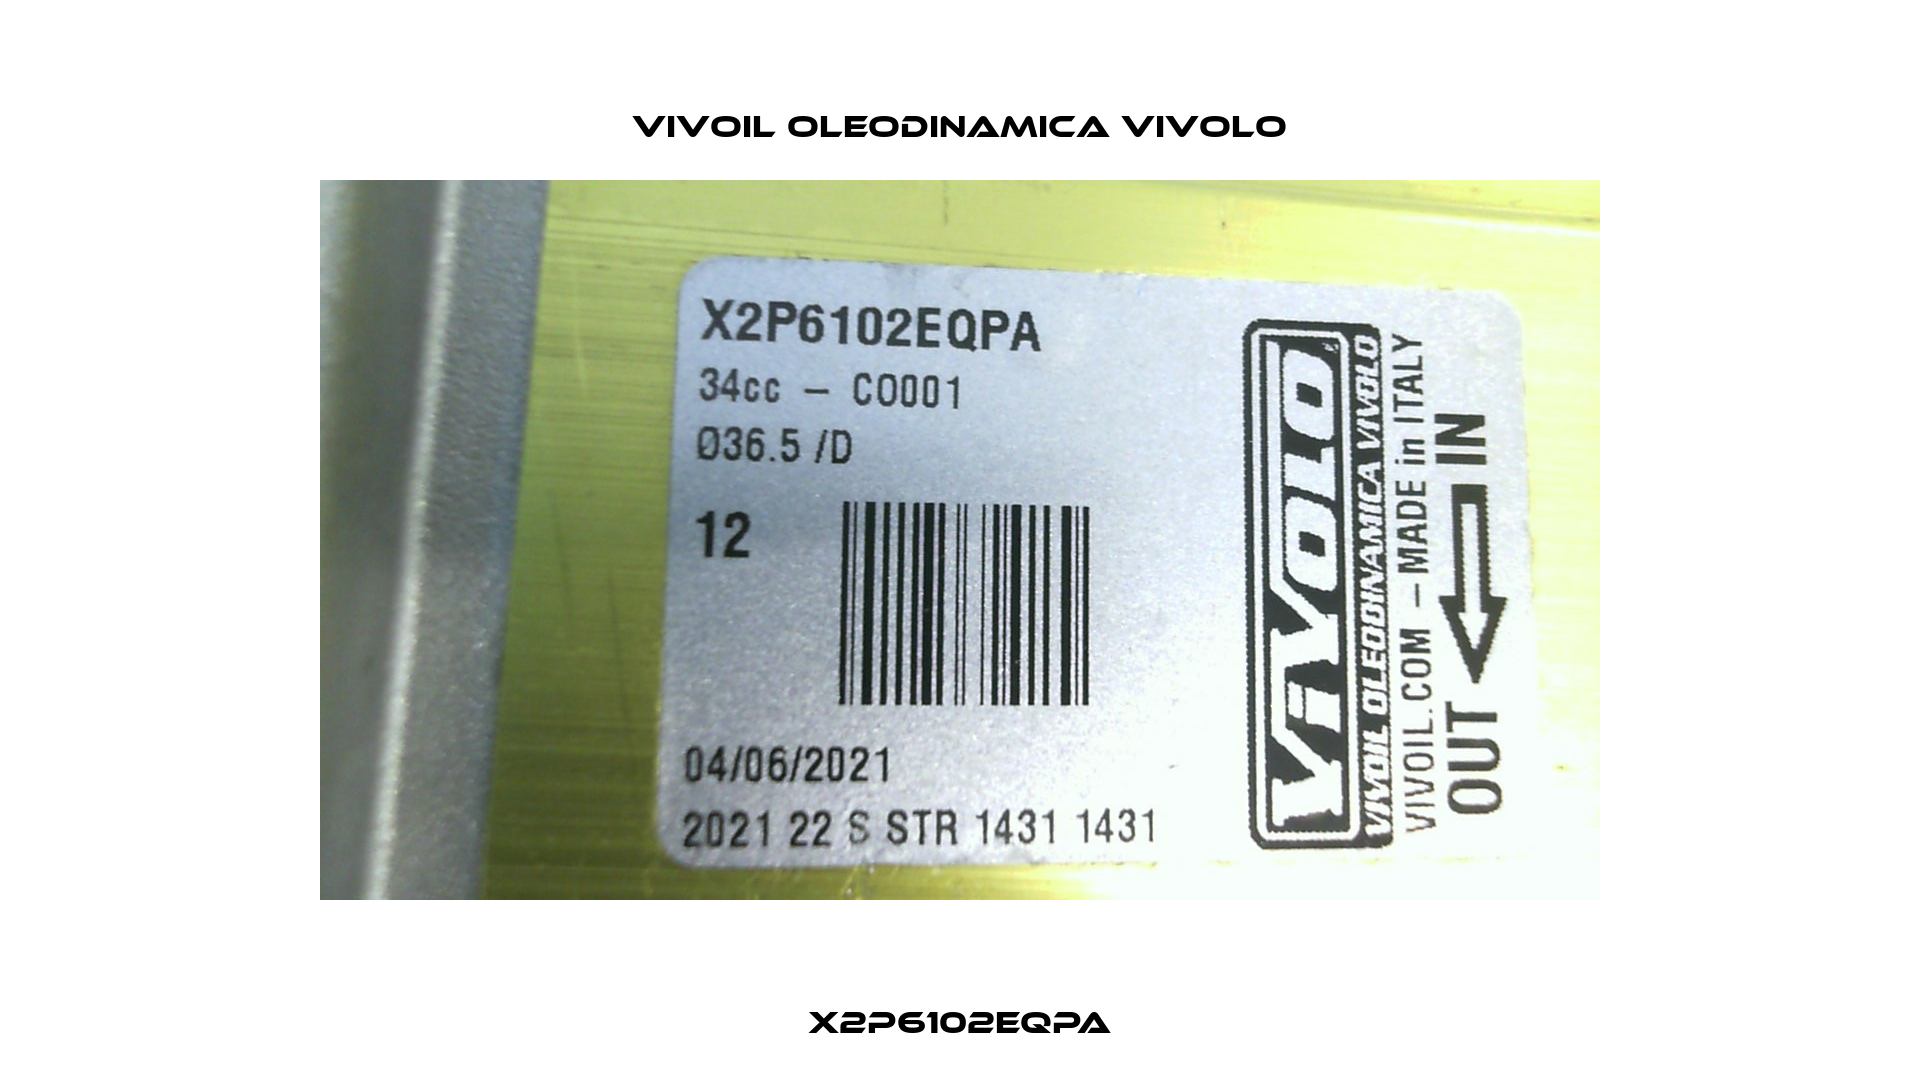 X2P6102EQPA Vivoil Oleodinamica Vivolo